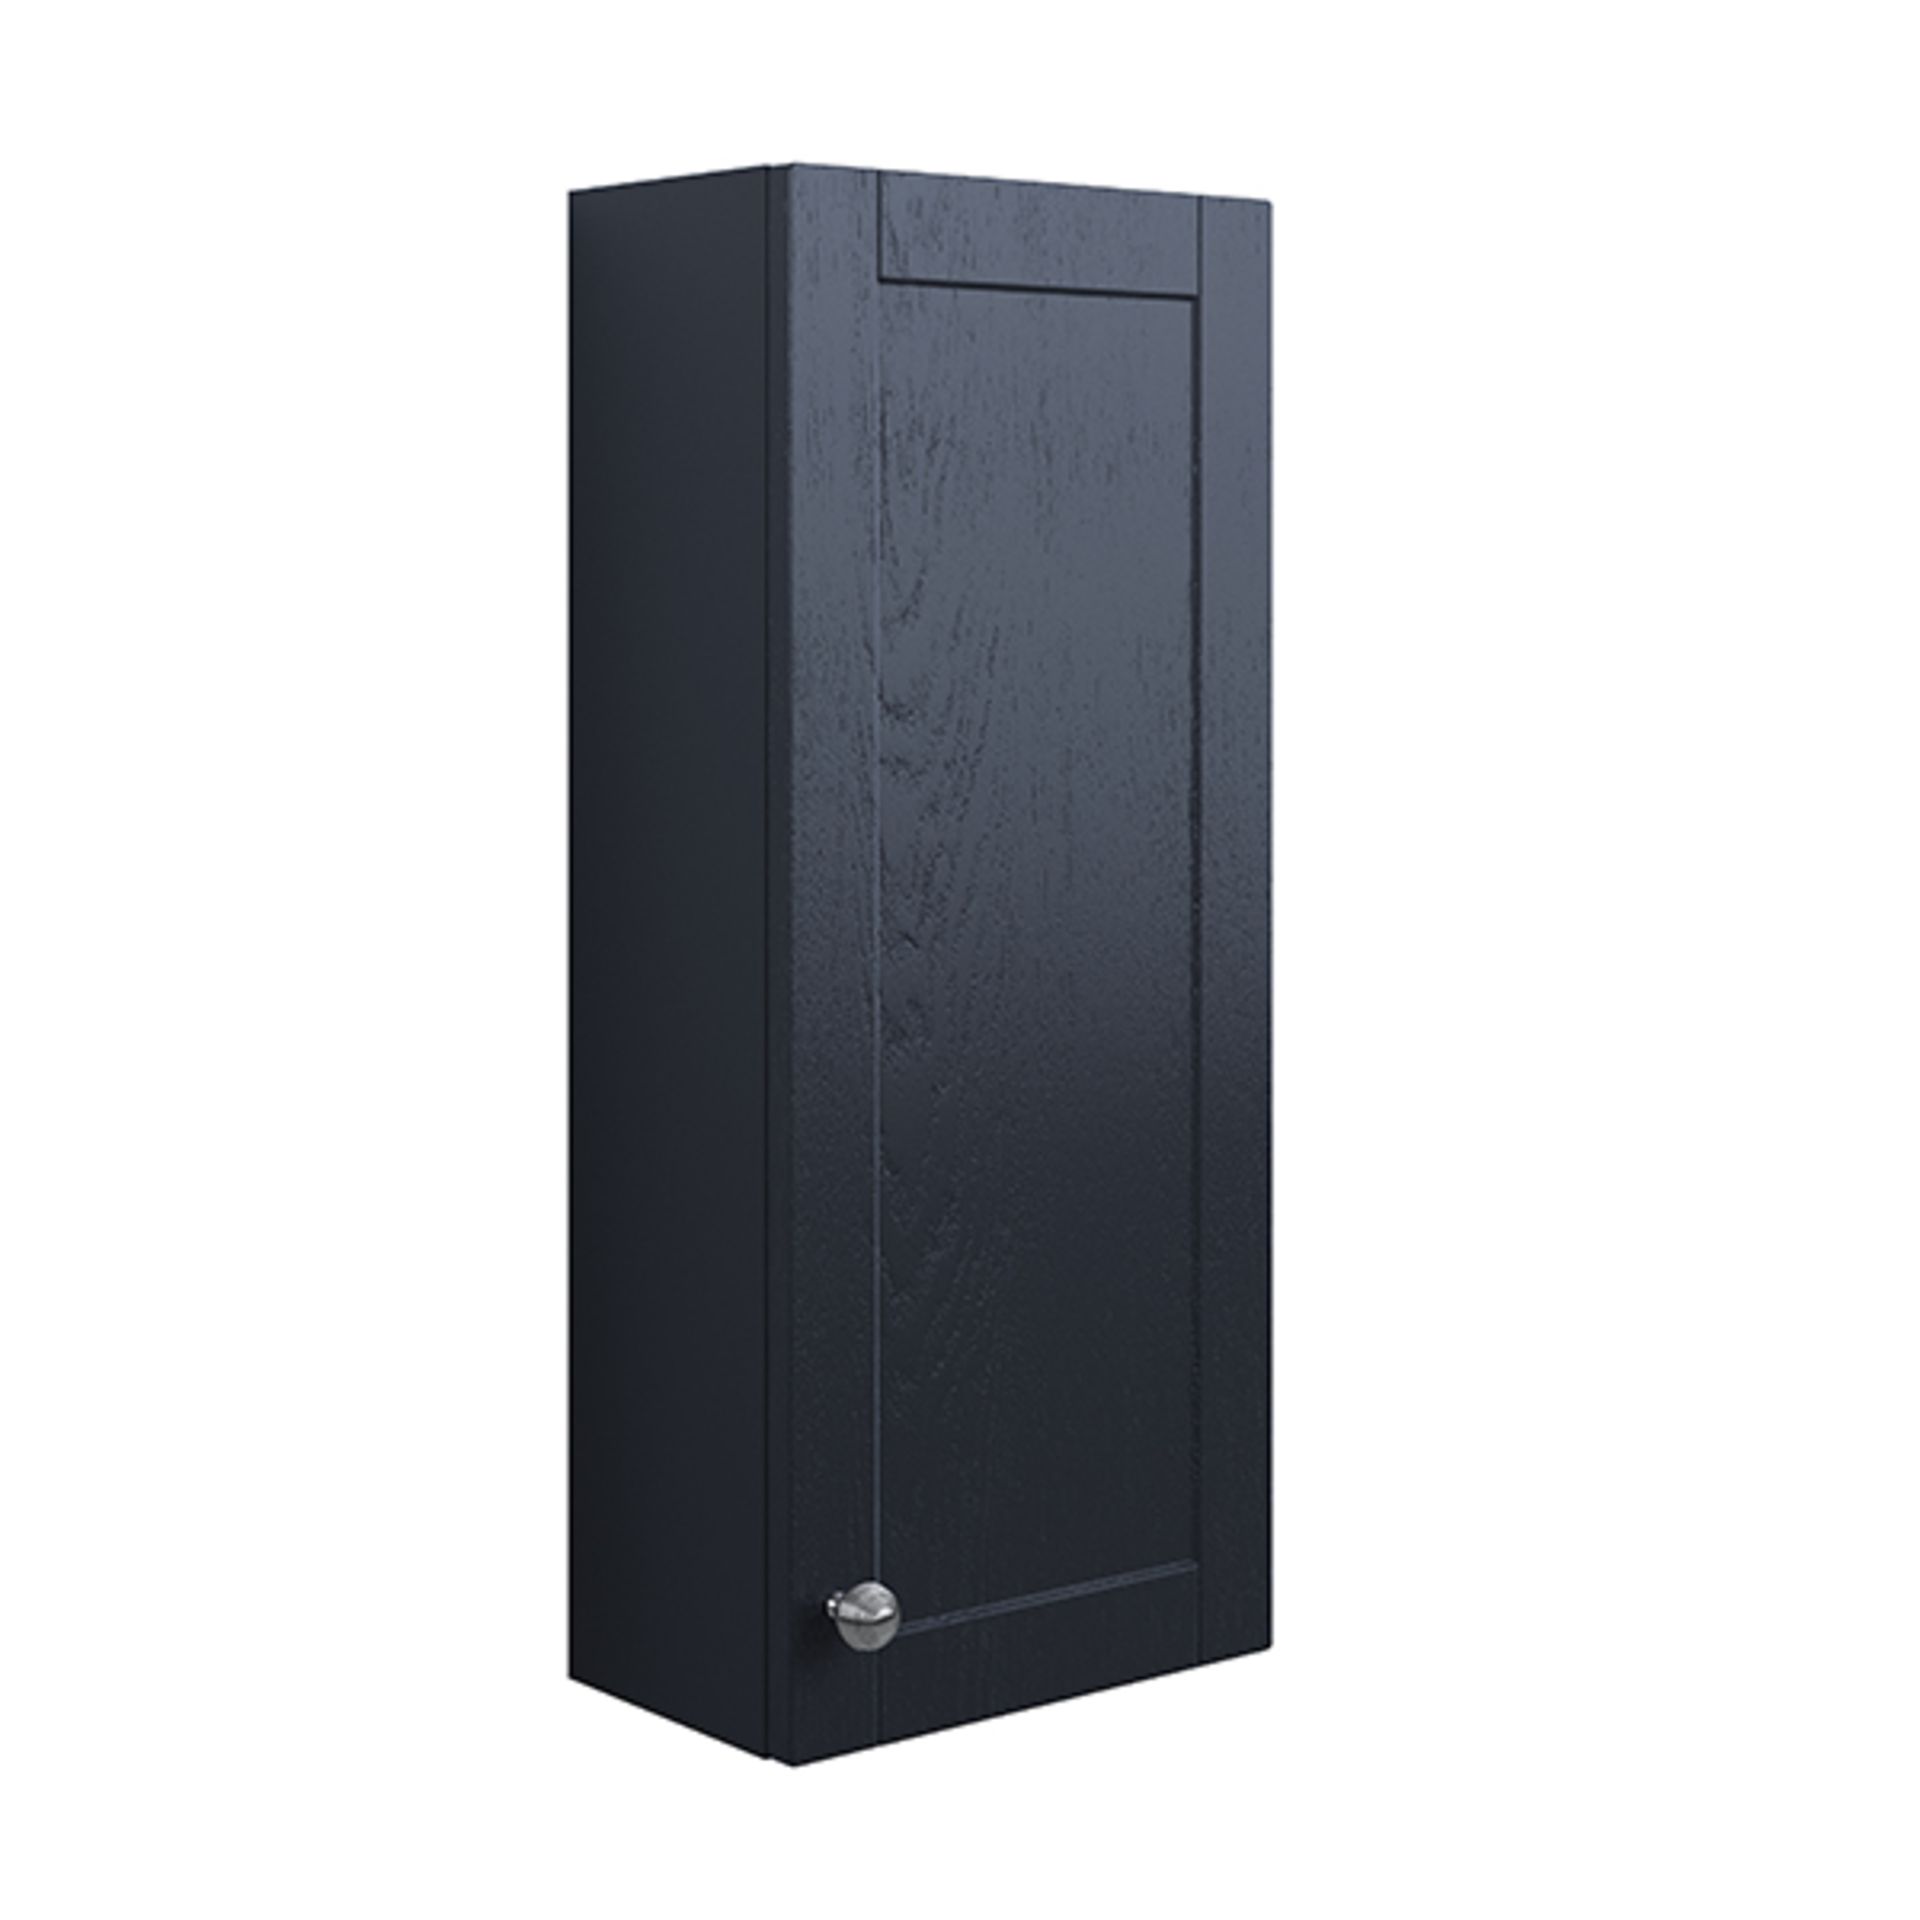 NEW (C221) Benita 300 Indigo Ash 1 Door Wall Mounted Storage Unit. 300 x 180 x 720mm (WxDxH) in... - Image 2 of 2